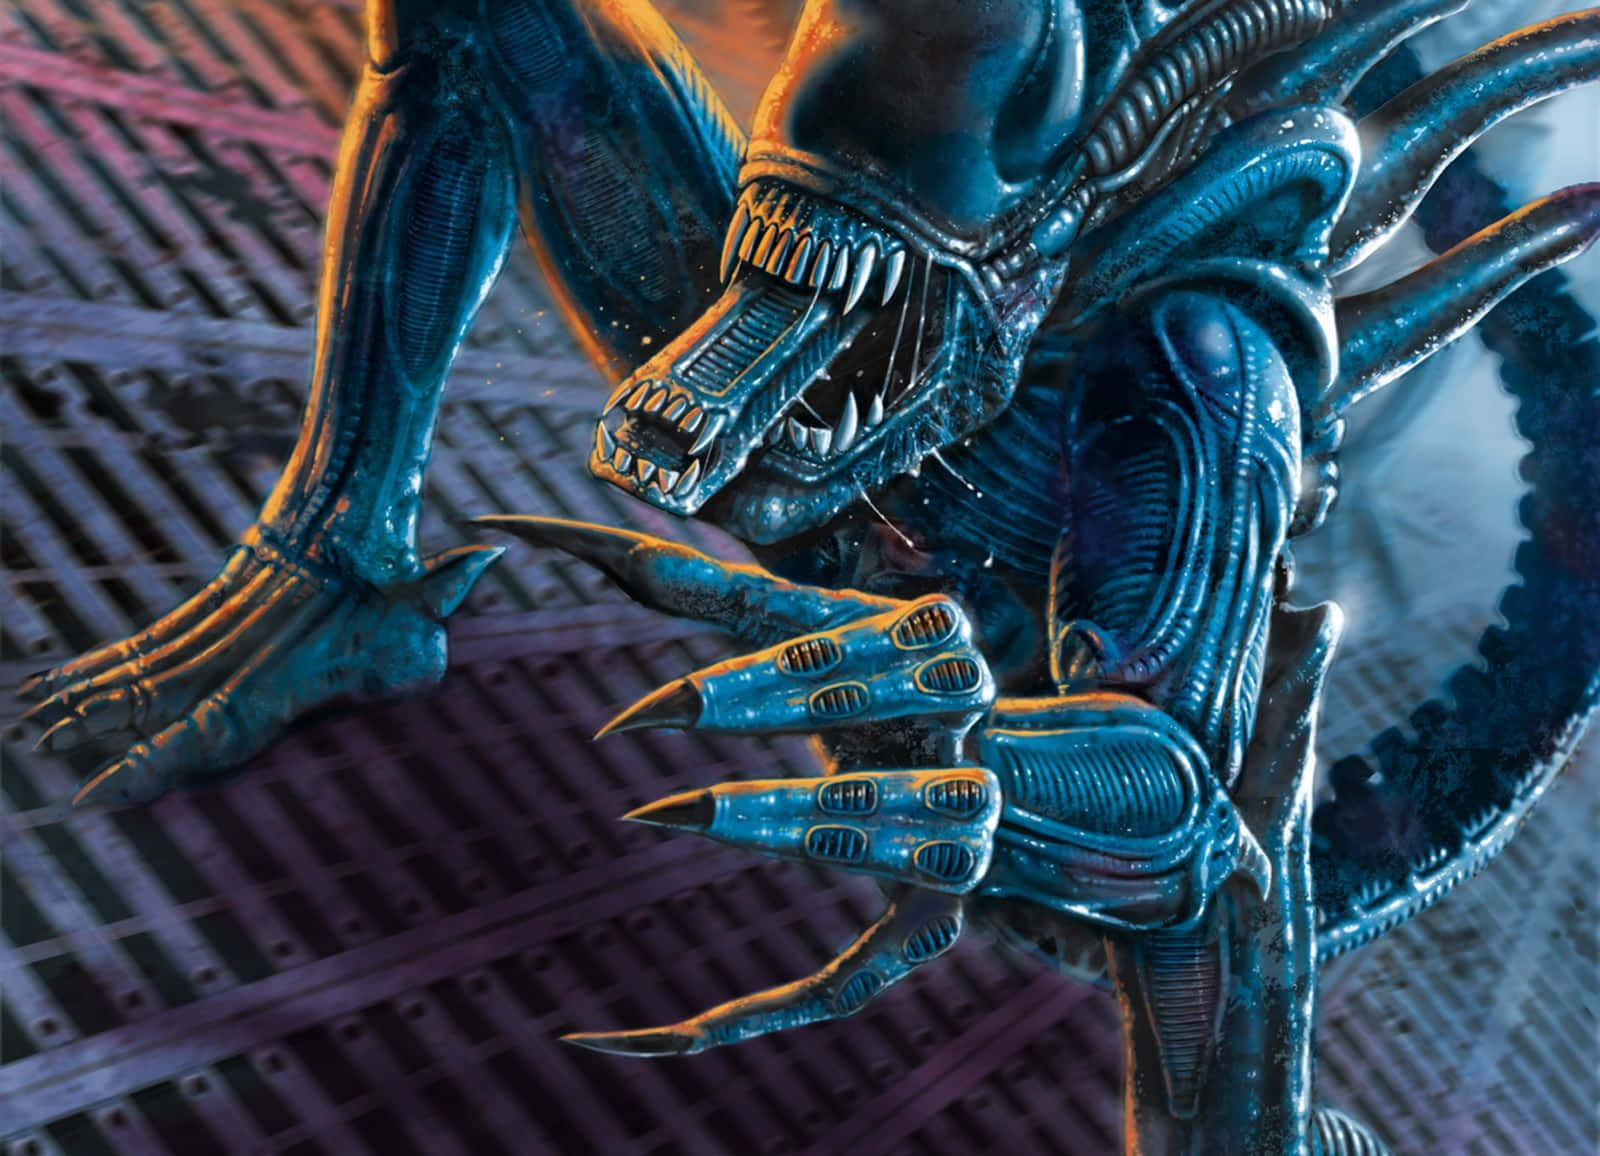 aliens 1986 wallpaper